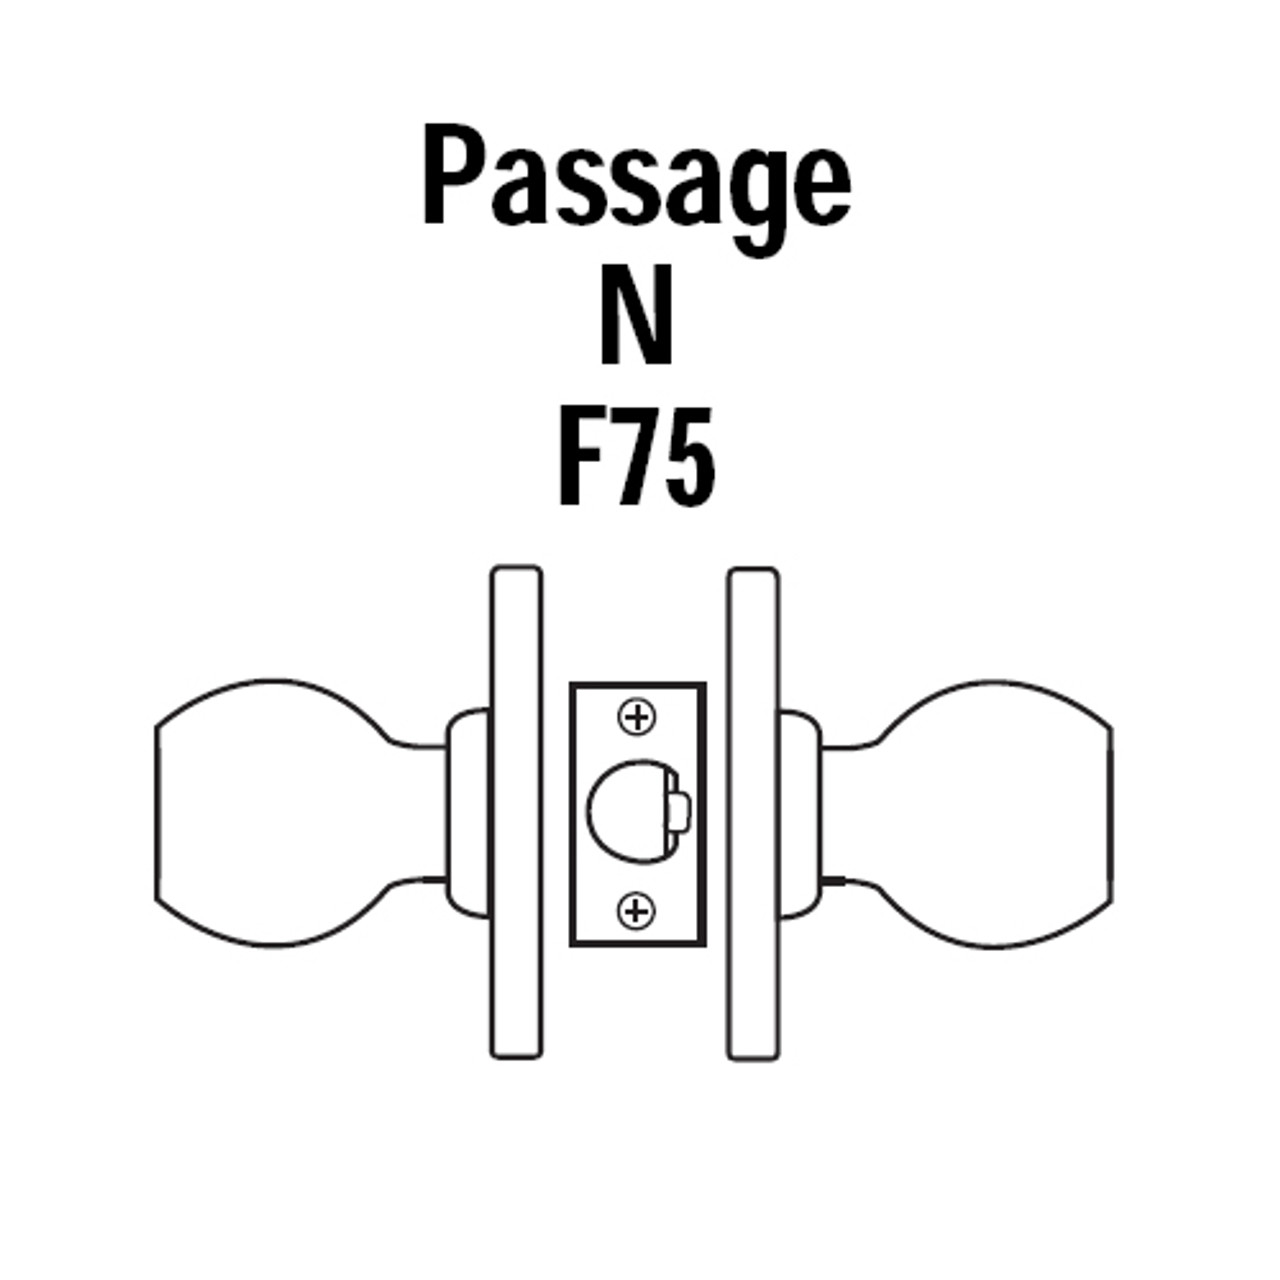 8K30N6CSTK612 Best 8K Series Passage Heavy Duty Cylindrical Knob Locks with Tulip Style in Satin Bronze